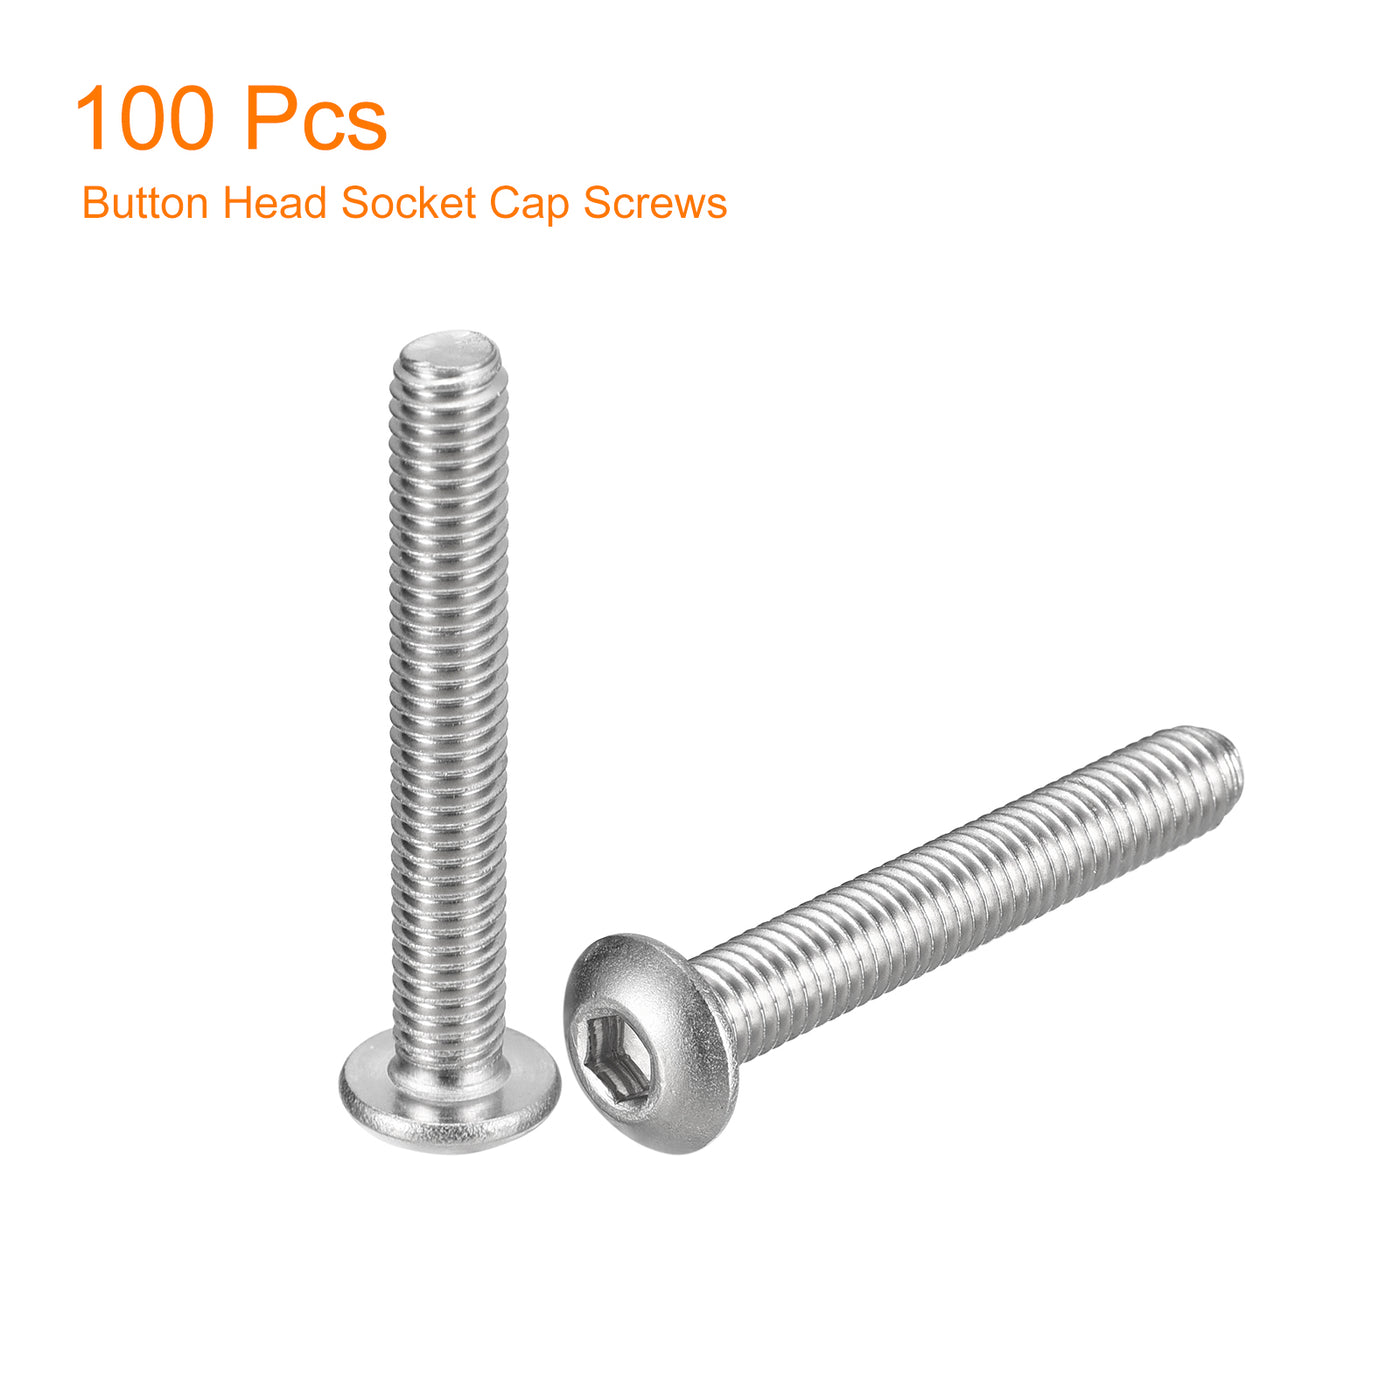 uxcell Uxcell #10-32x1-1/4" Button Head Socket Cap Screws, 100pcs 304 Stainless Steel Screws